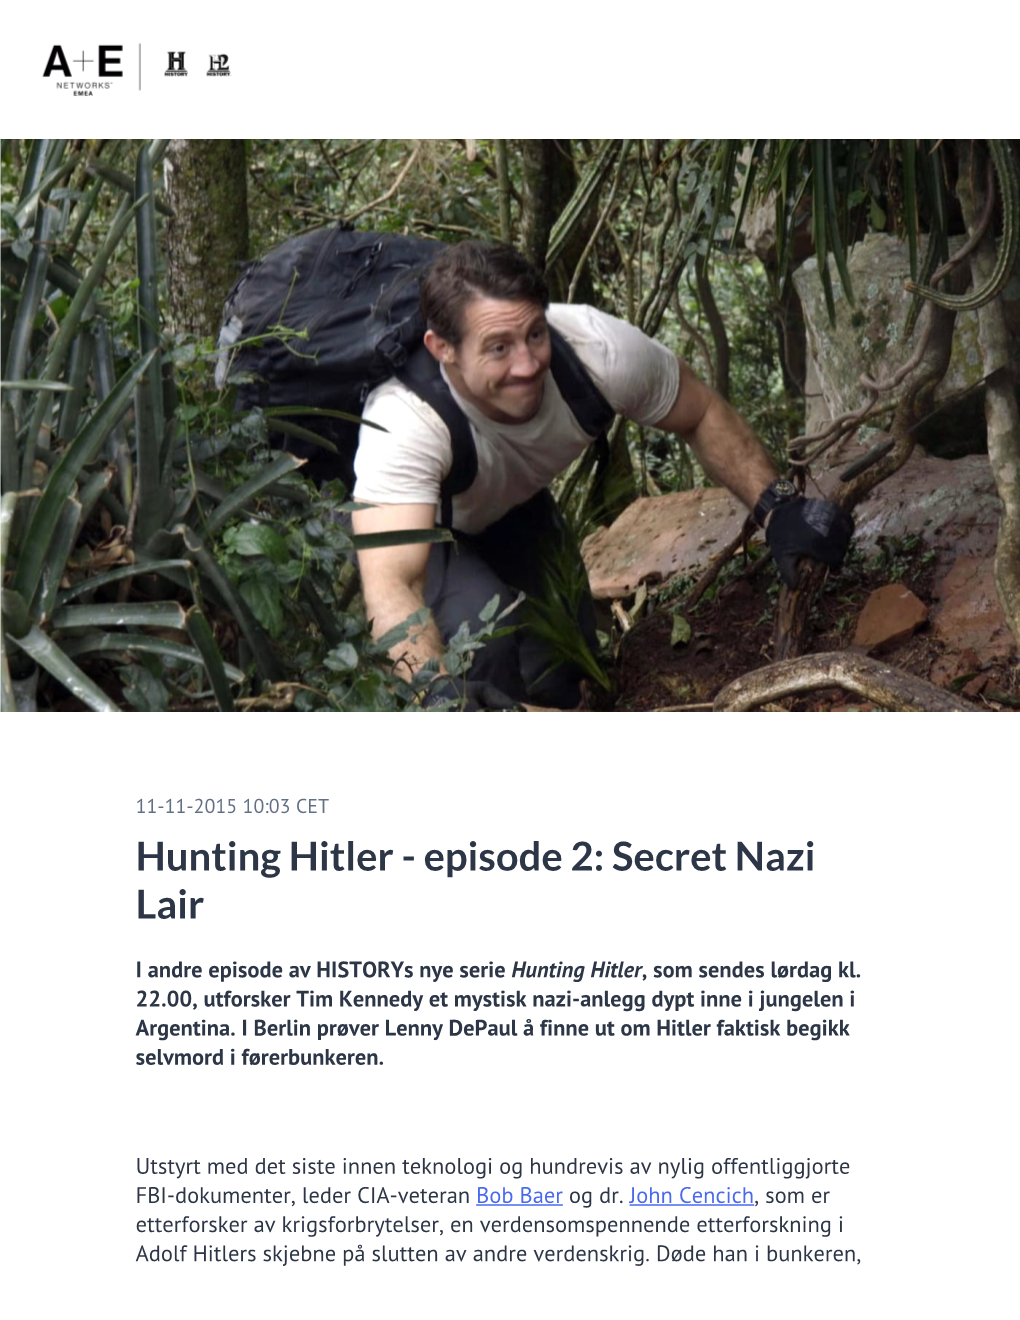 Hunting Hitler - Episode 2: Secret Nazi Lair